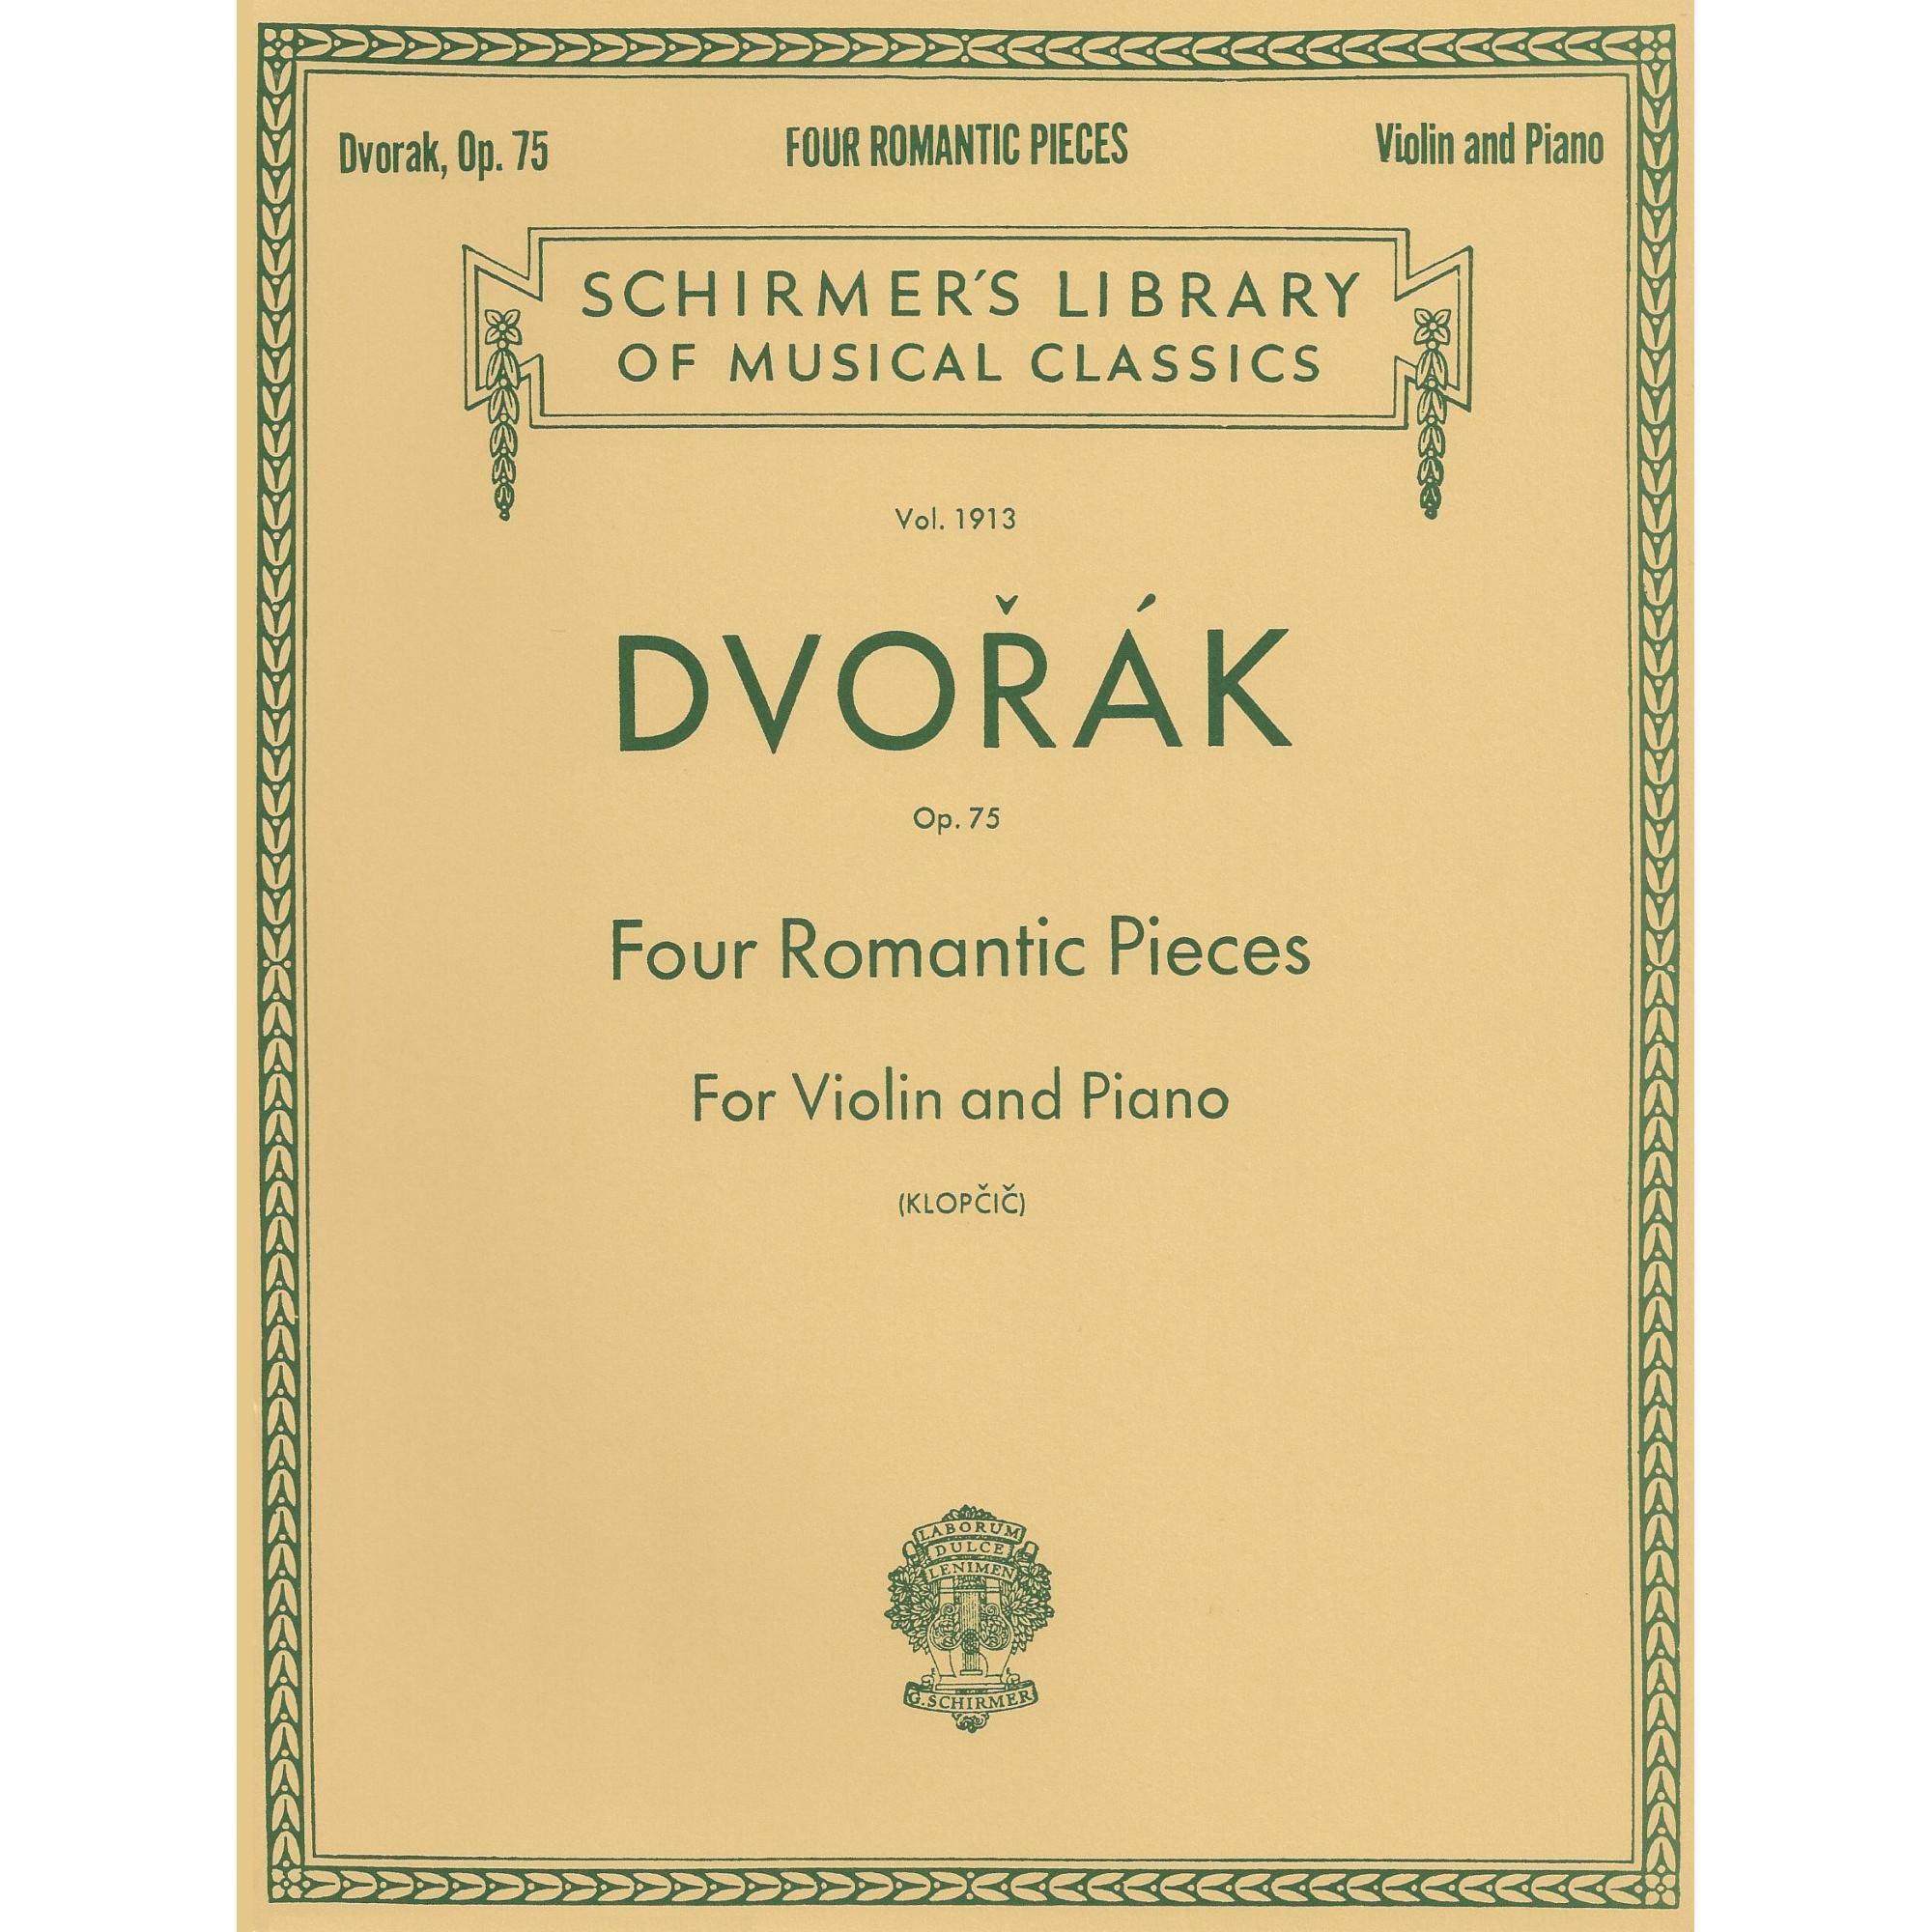 Dvorak -- Four Romantic Pieces, Op. 75 for Violin and Piano